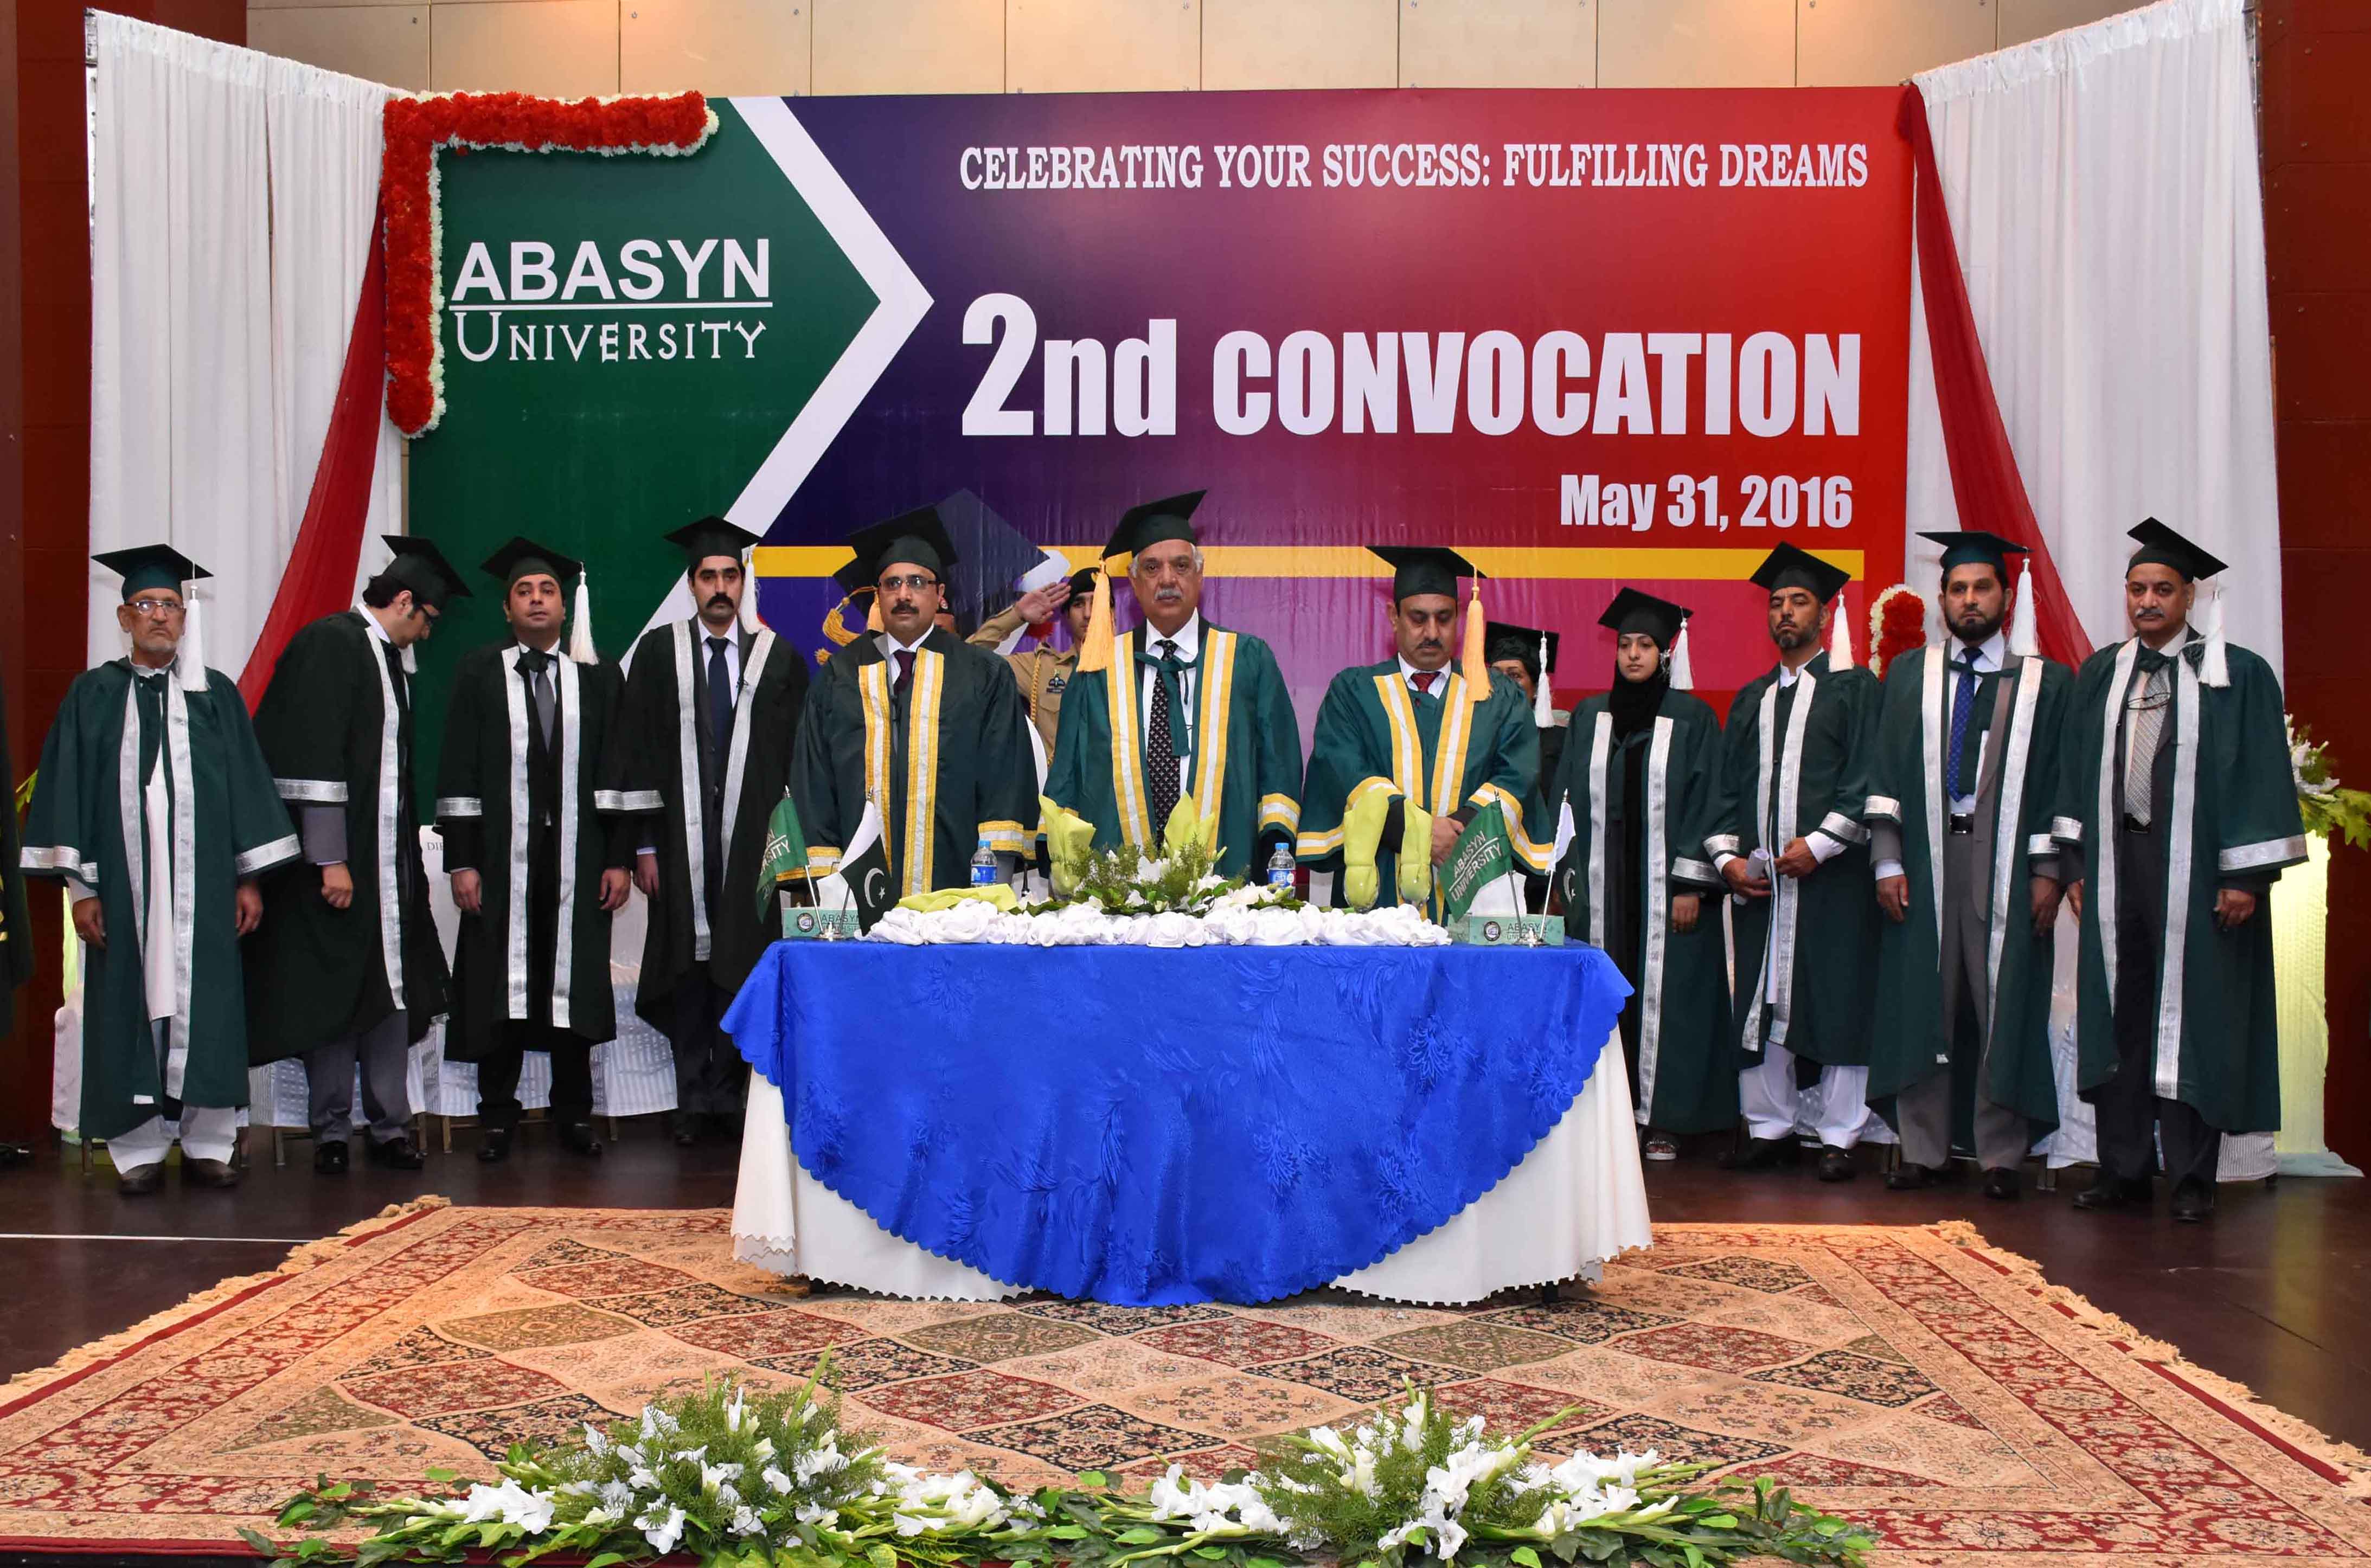 2nd Convocation of Abasyn University